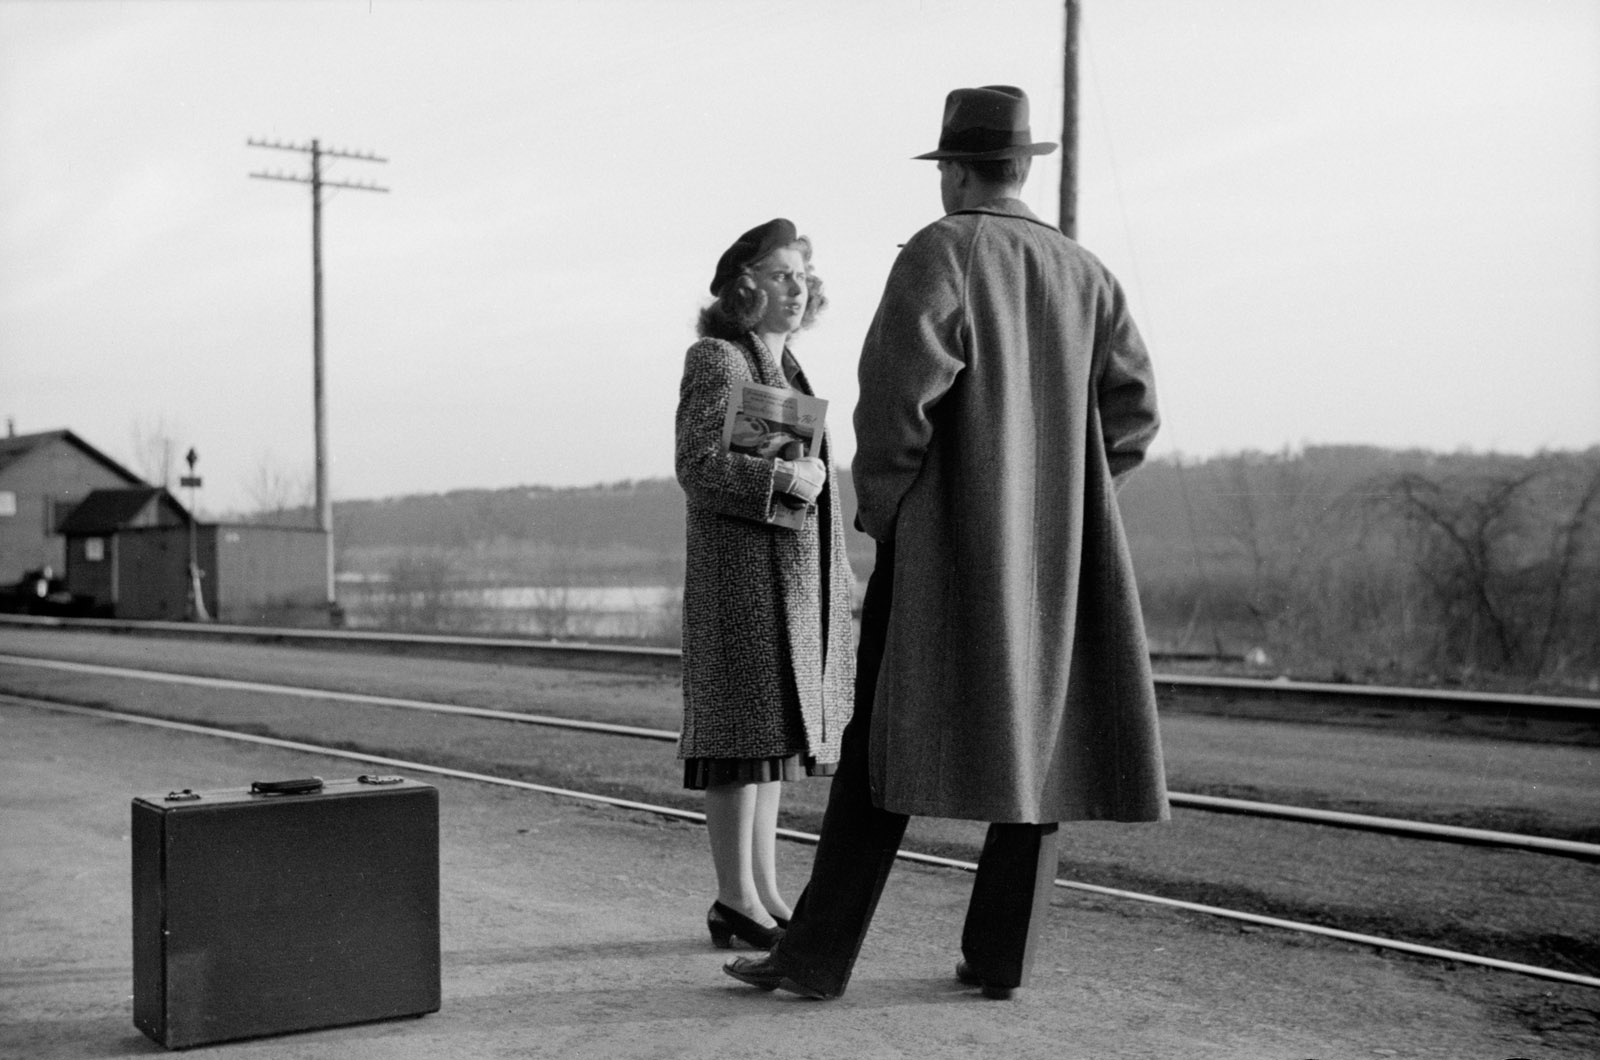 Waiting for the train to Minneapolis, East Dubuque, Illinois, April 1940